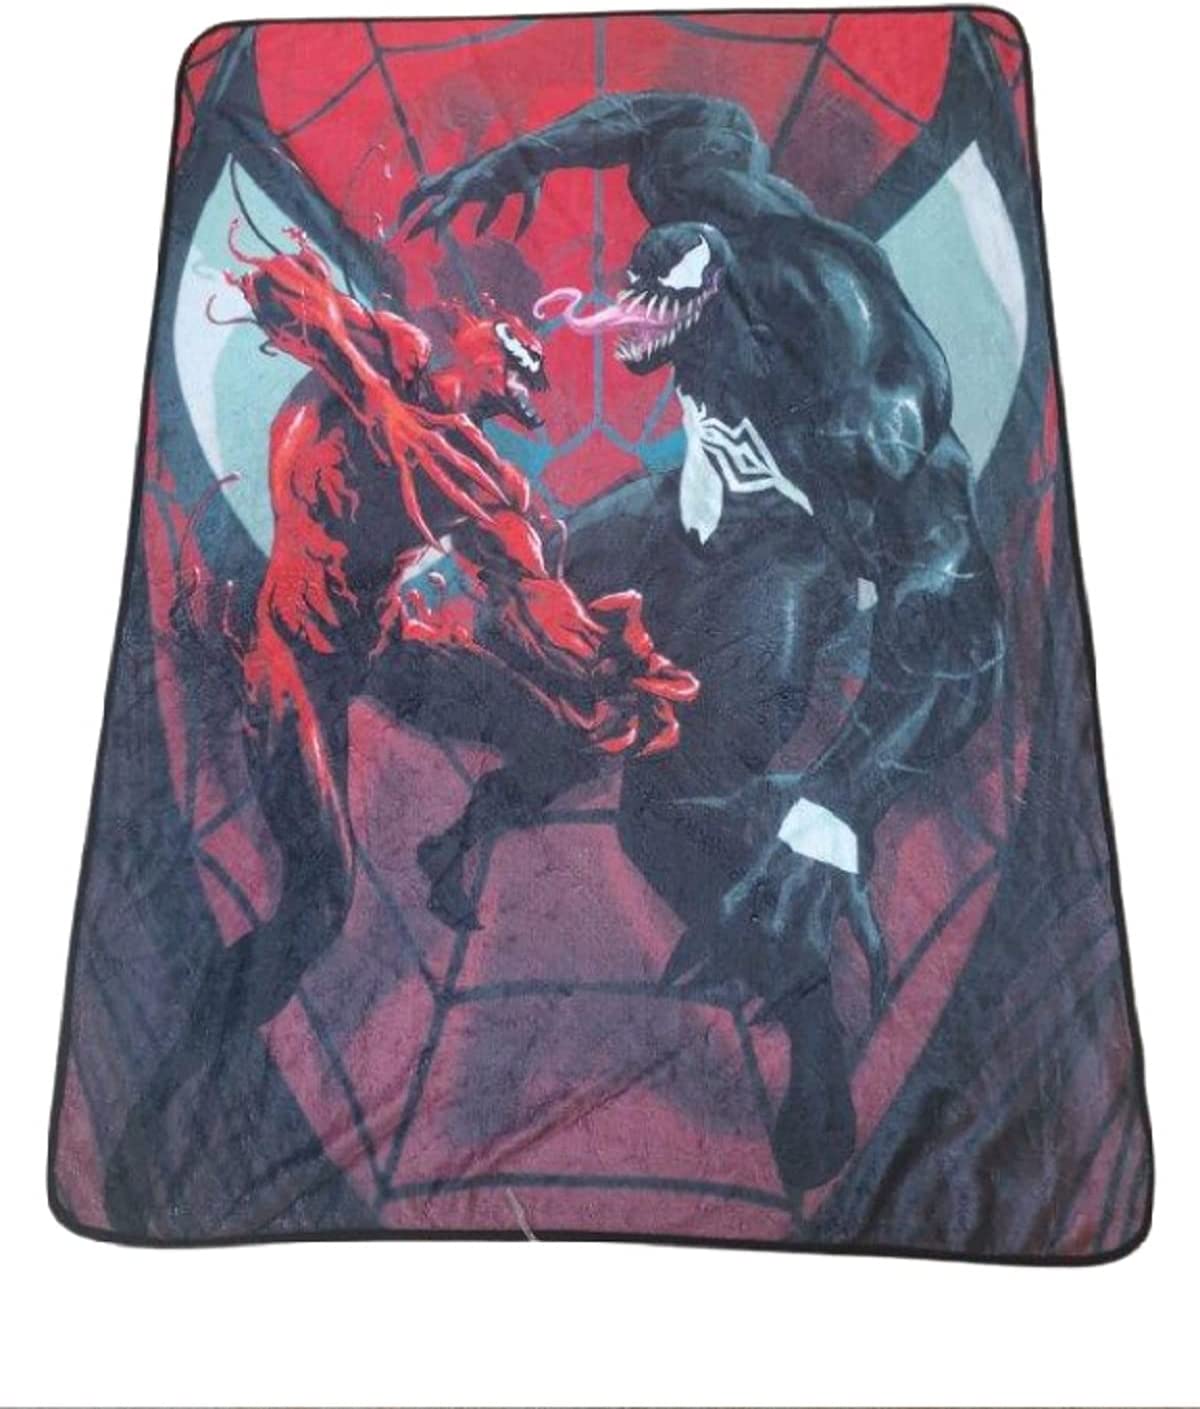 Marvel The Amazing Spider-Man Venom x Carnage Fleece Throw Blanket| Measures 60 x 45 Inches